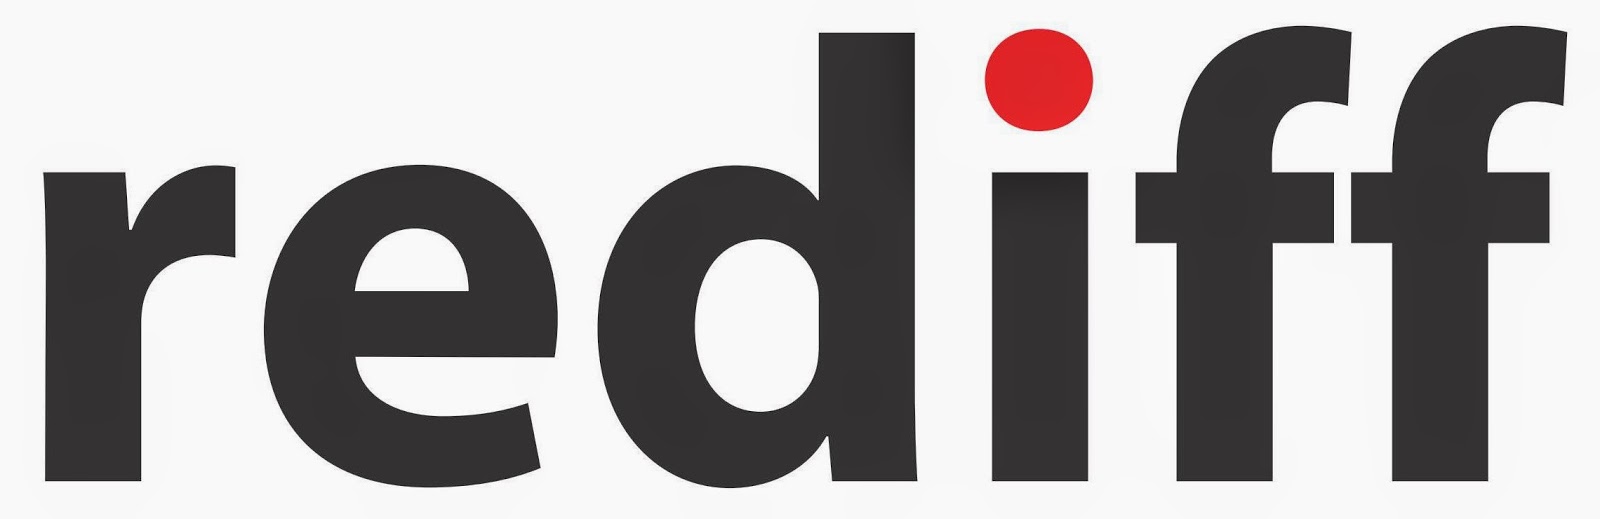 Rediffmail Logos